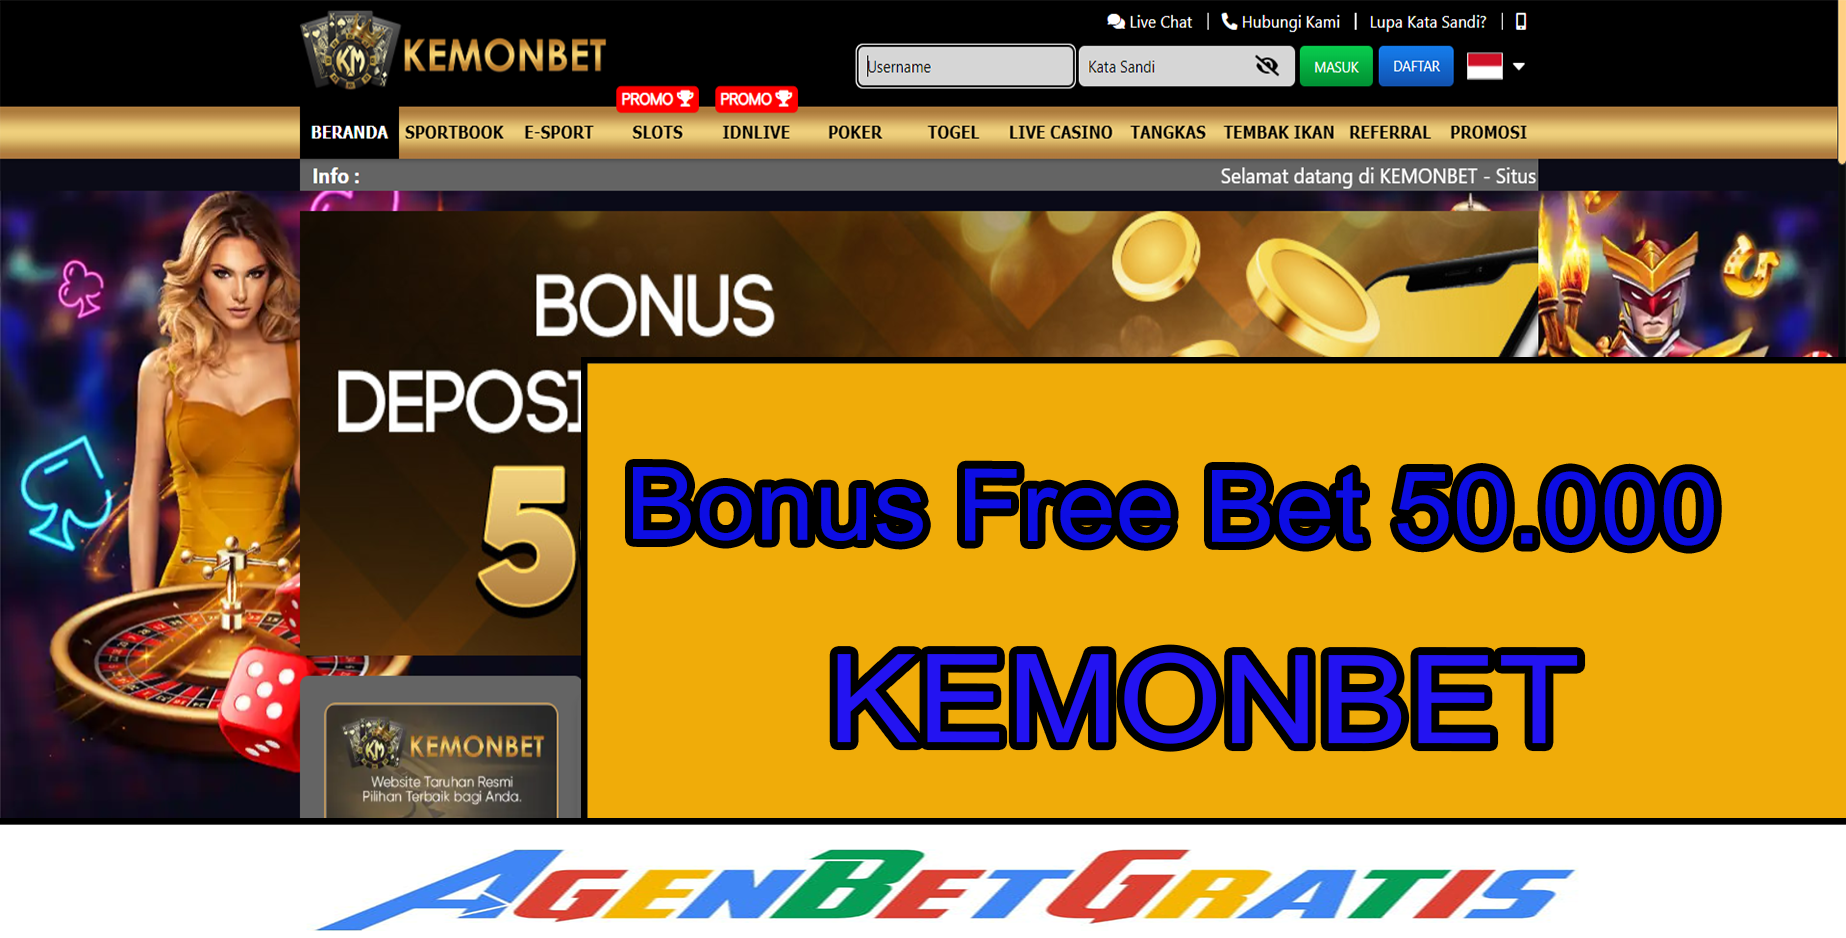 KEMONBET - Bonus FreeBet 50.000